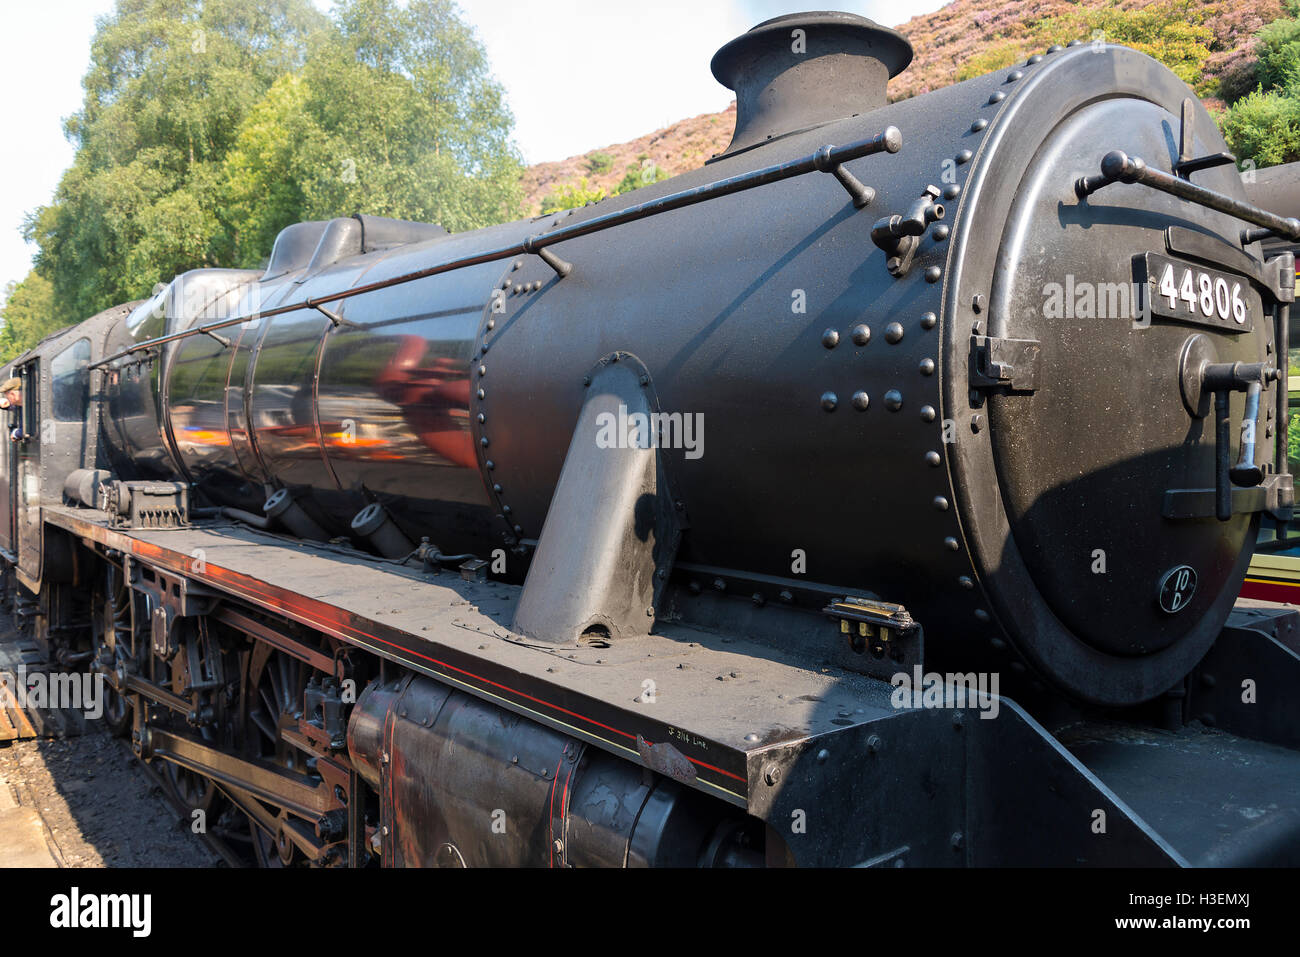 Preserved Stanier Black Five Steam Locomotive 44806 Pulling Passenger Train at Goathland Station North Yorkshire Moors Railway England United Kingdom Stock Photo